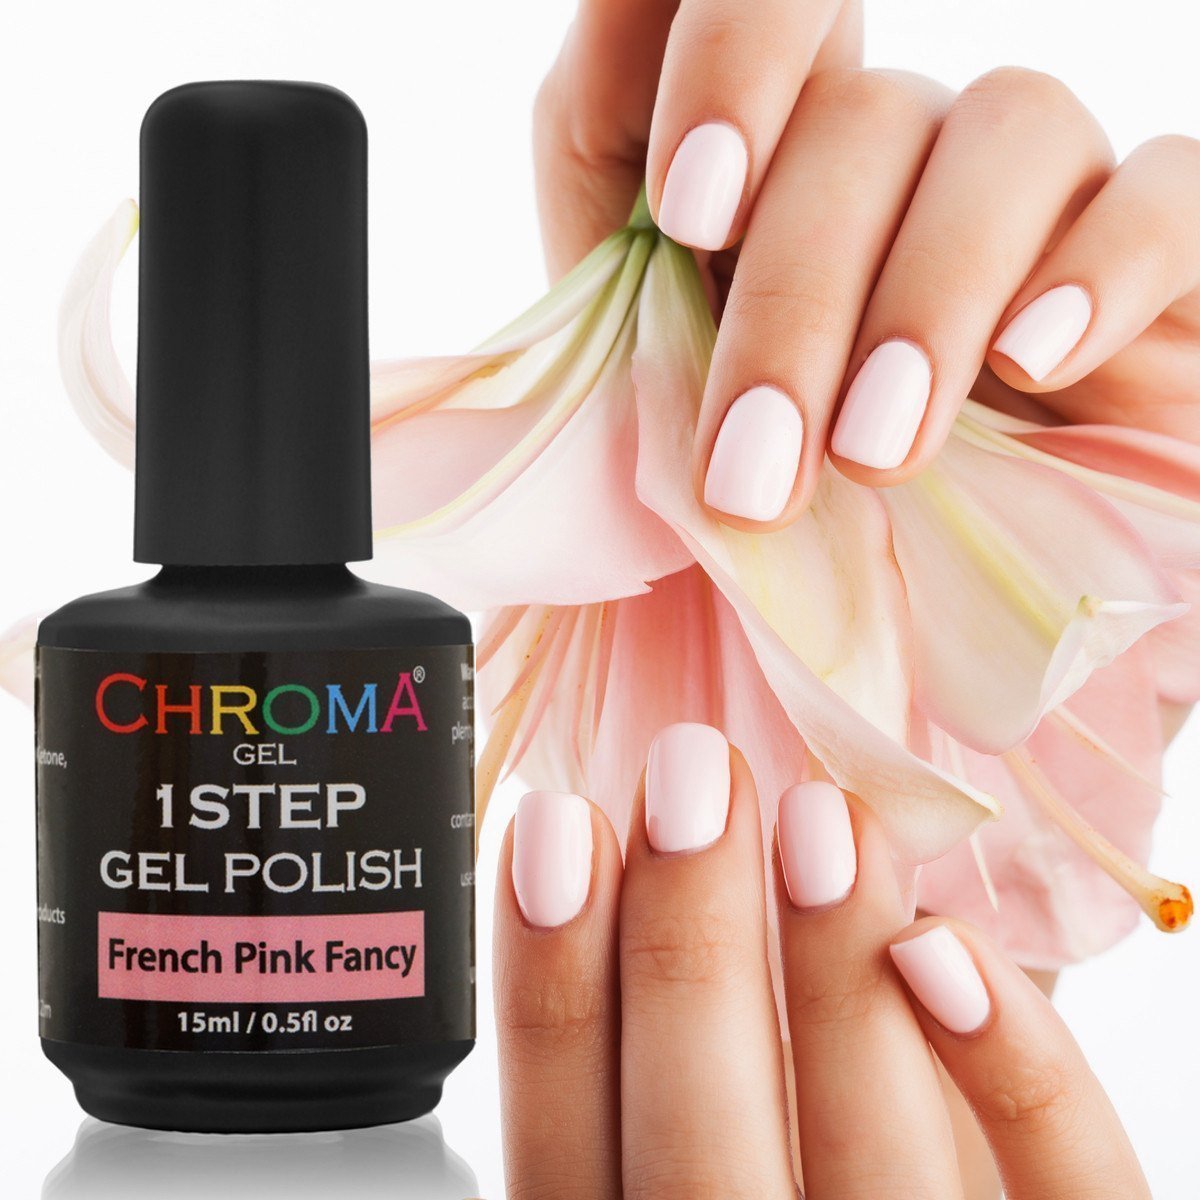 Chroma Gel 1 Step Gel Polish French Pink Fancy No.65 - beautyhair.co.ukChroma Gel